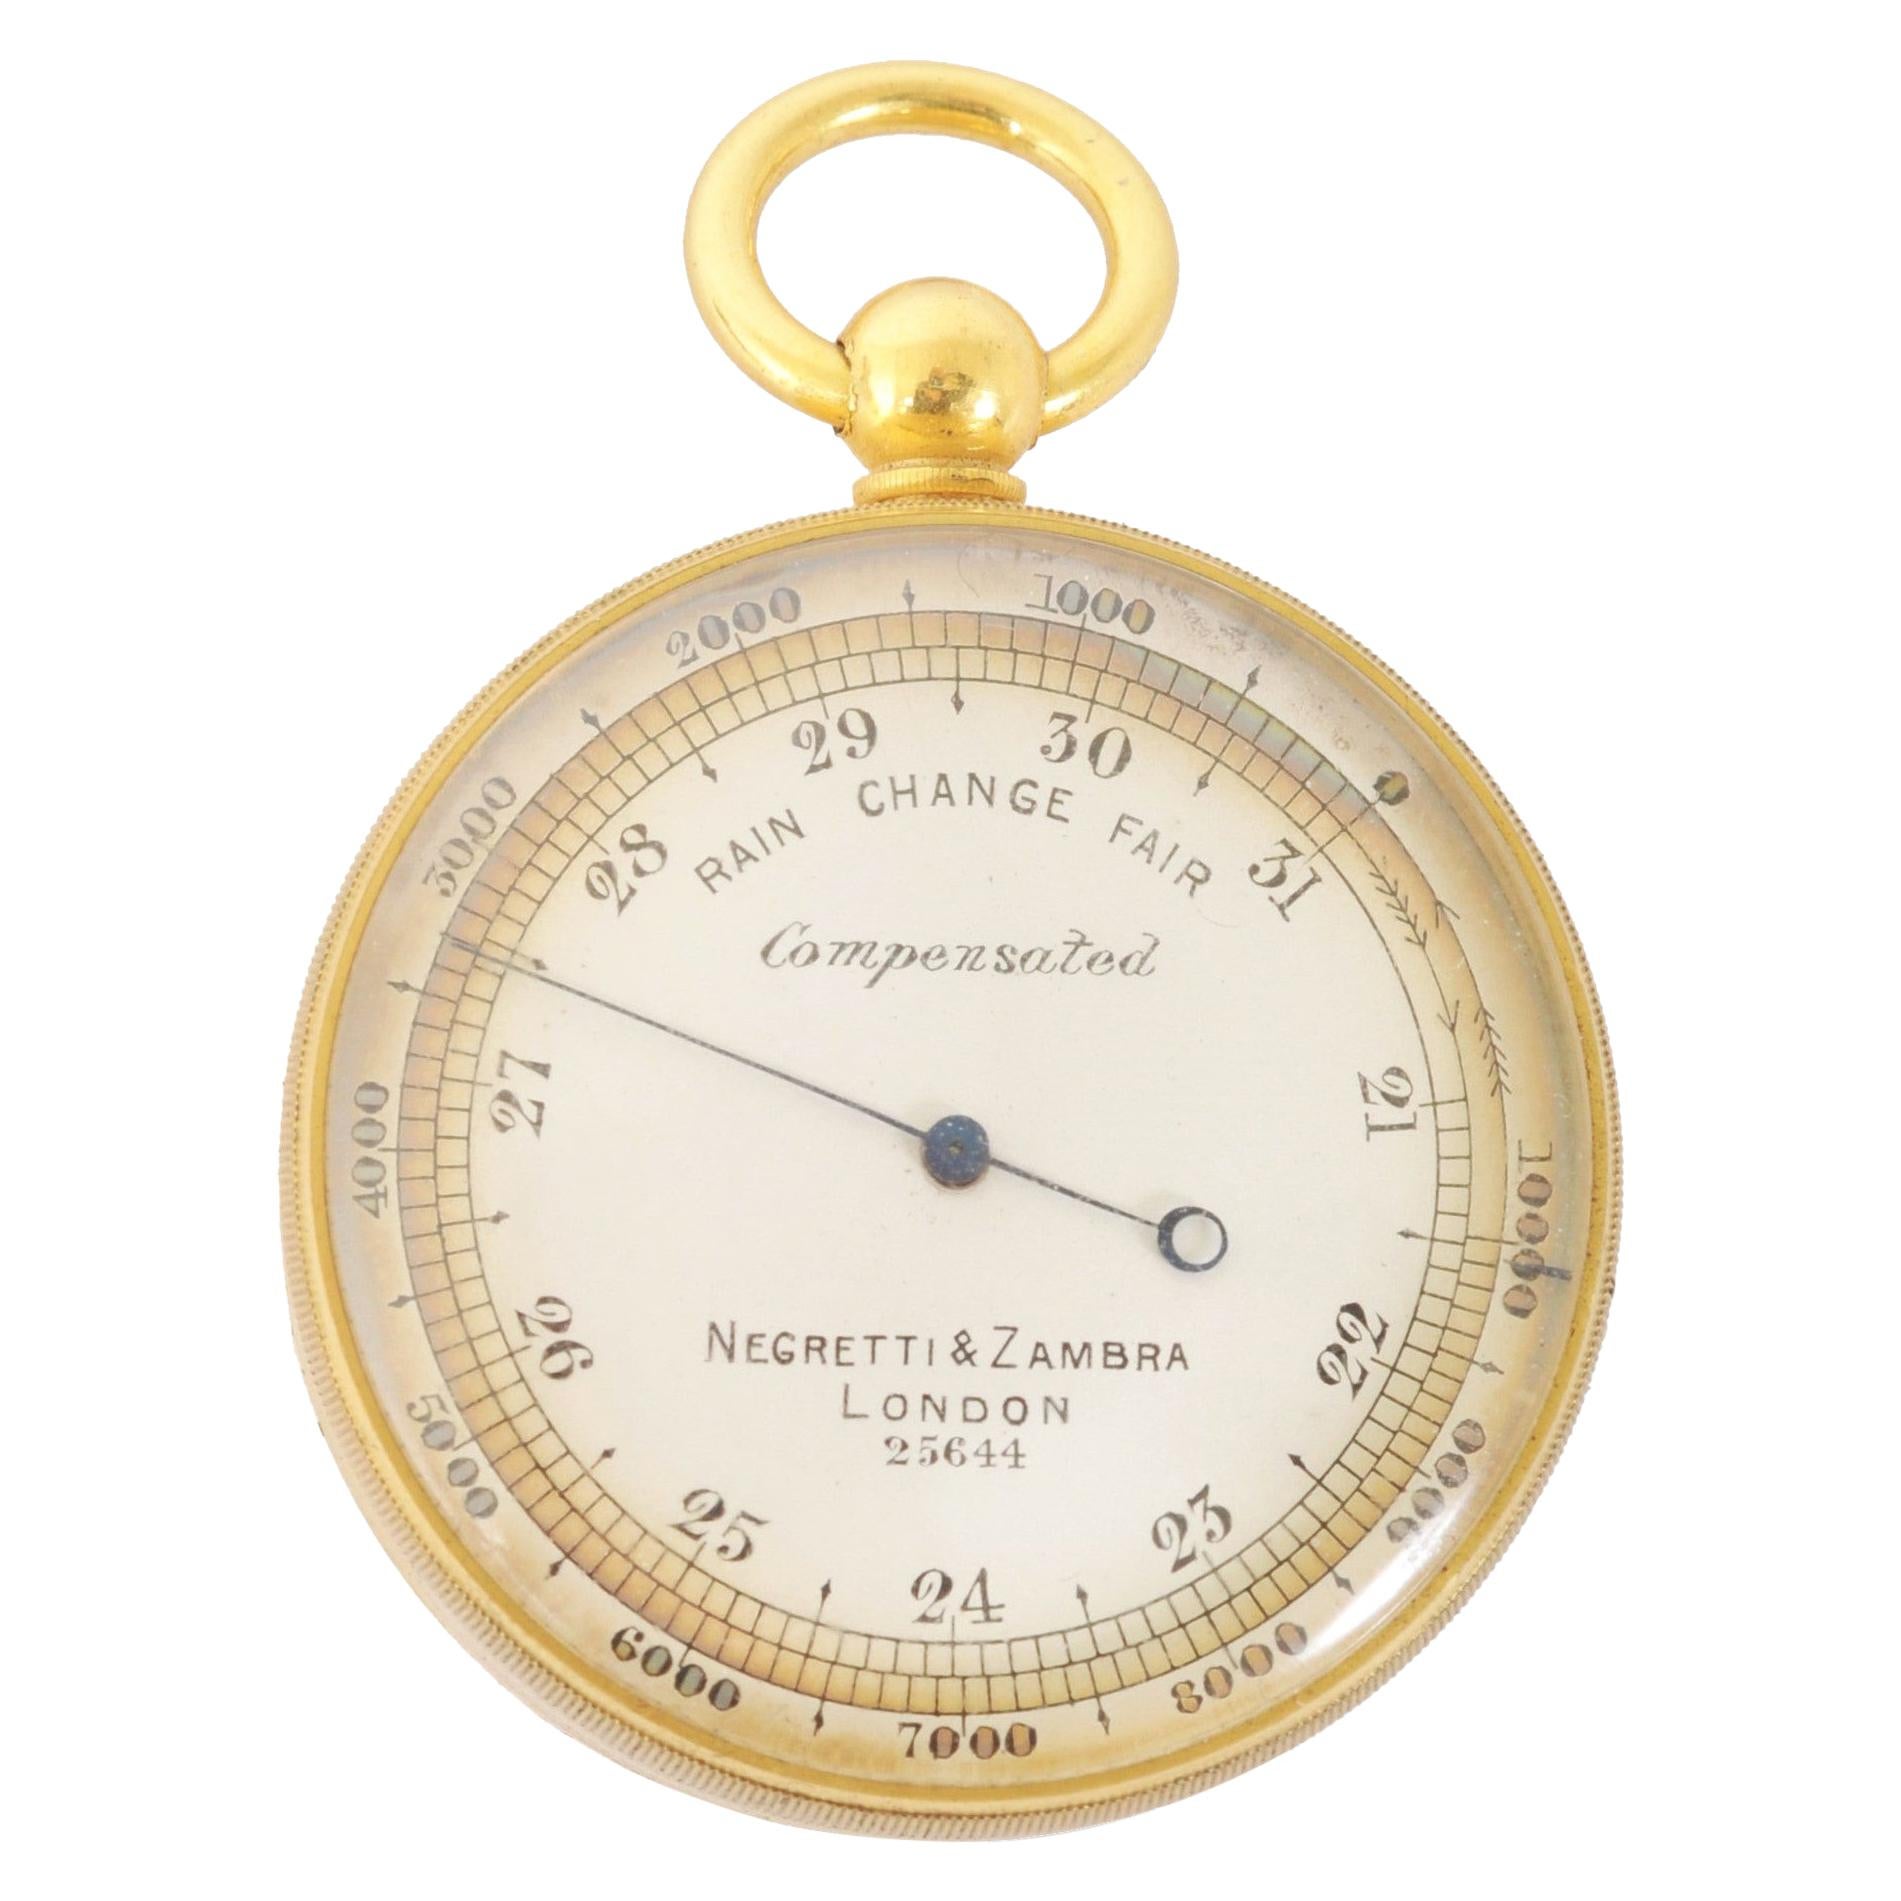 Antique 19th Century Pocket Barometer by Negretti & Zambra of London, circa 1880